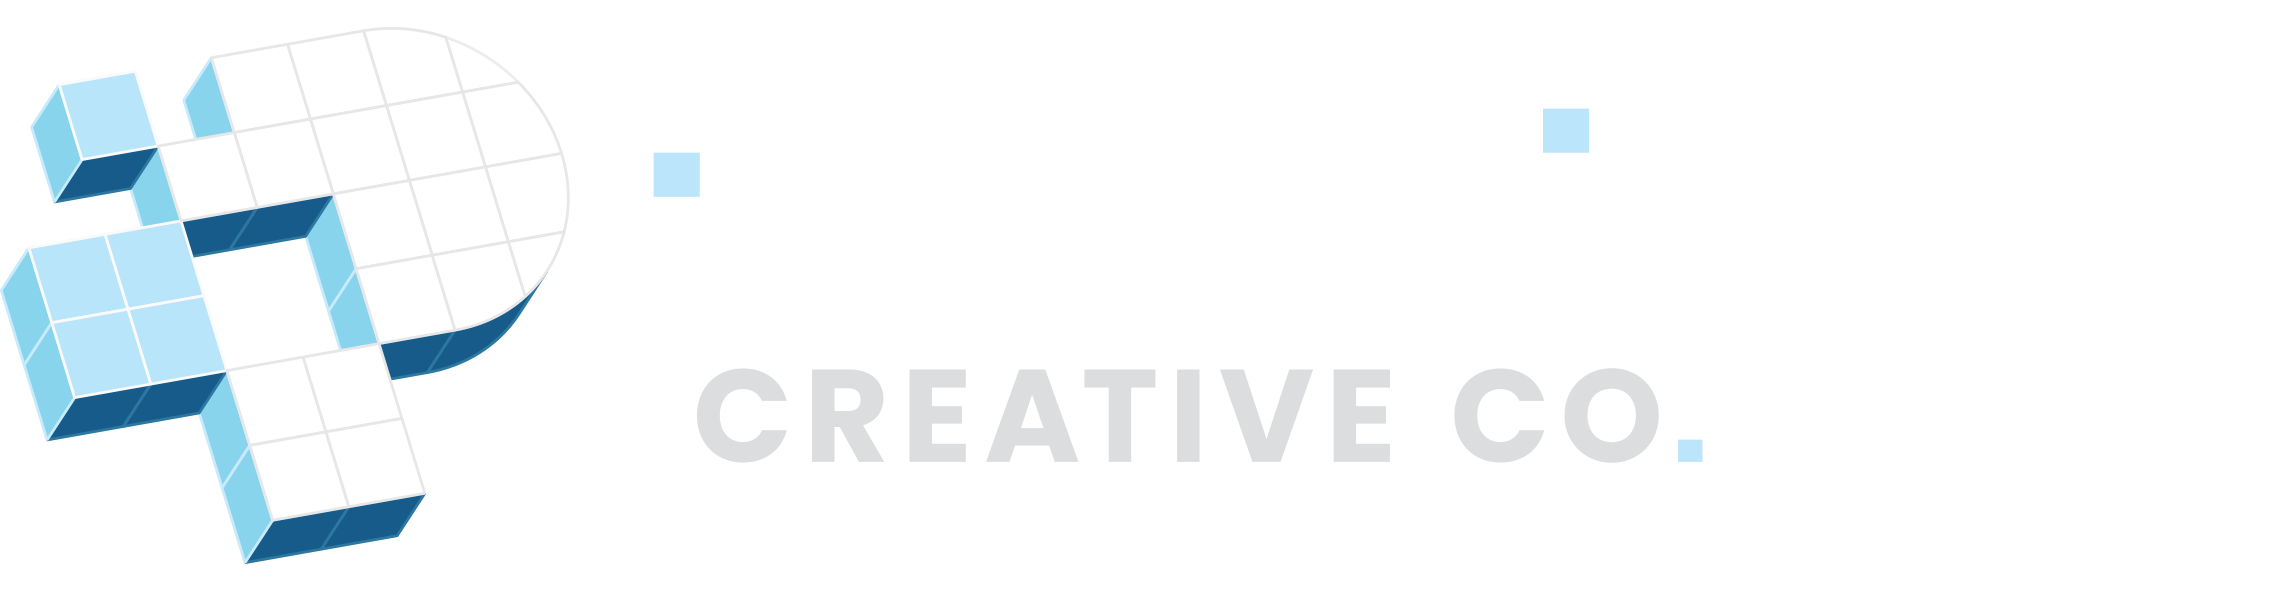 Pushes Pixels Creative Co.